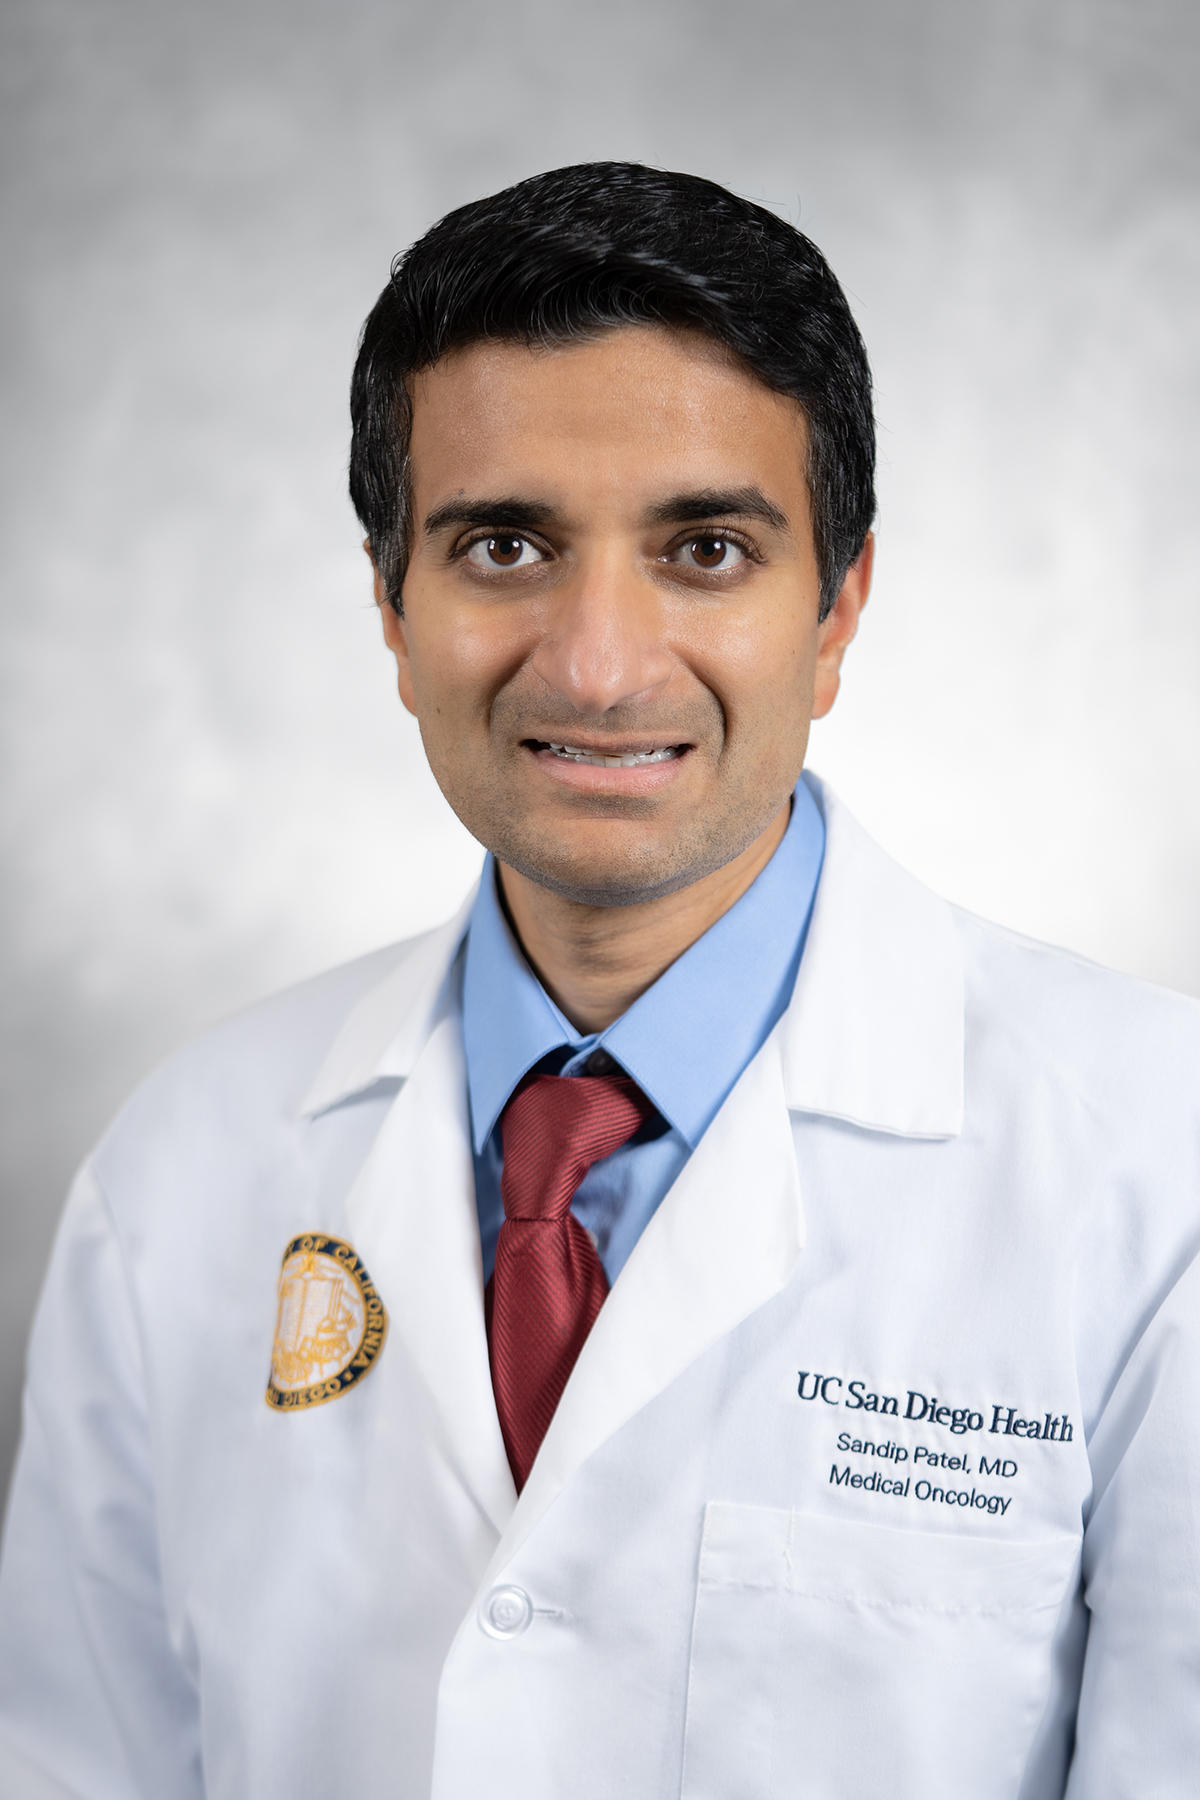 Dr. Sandip P. Patel, MD